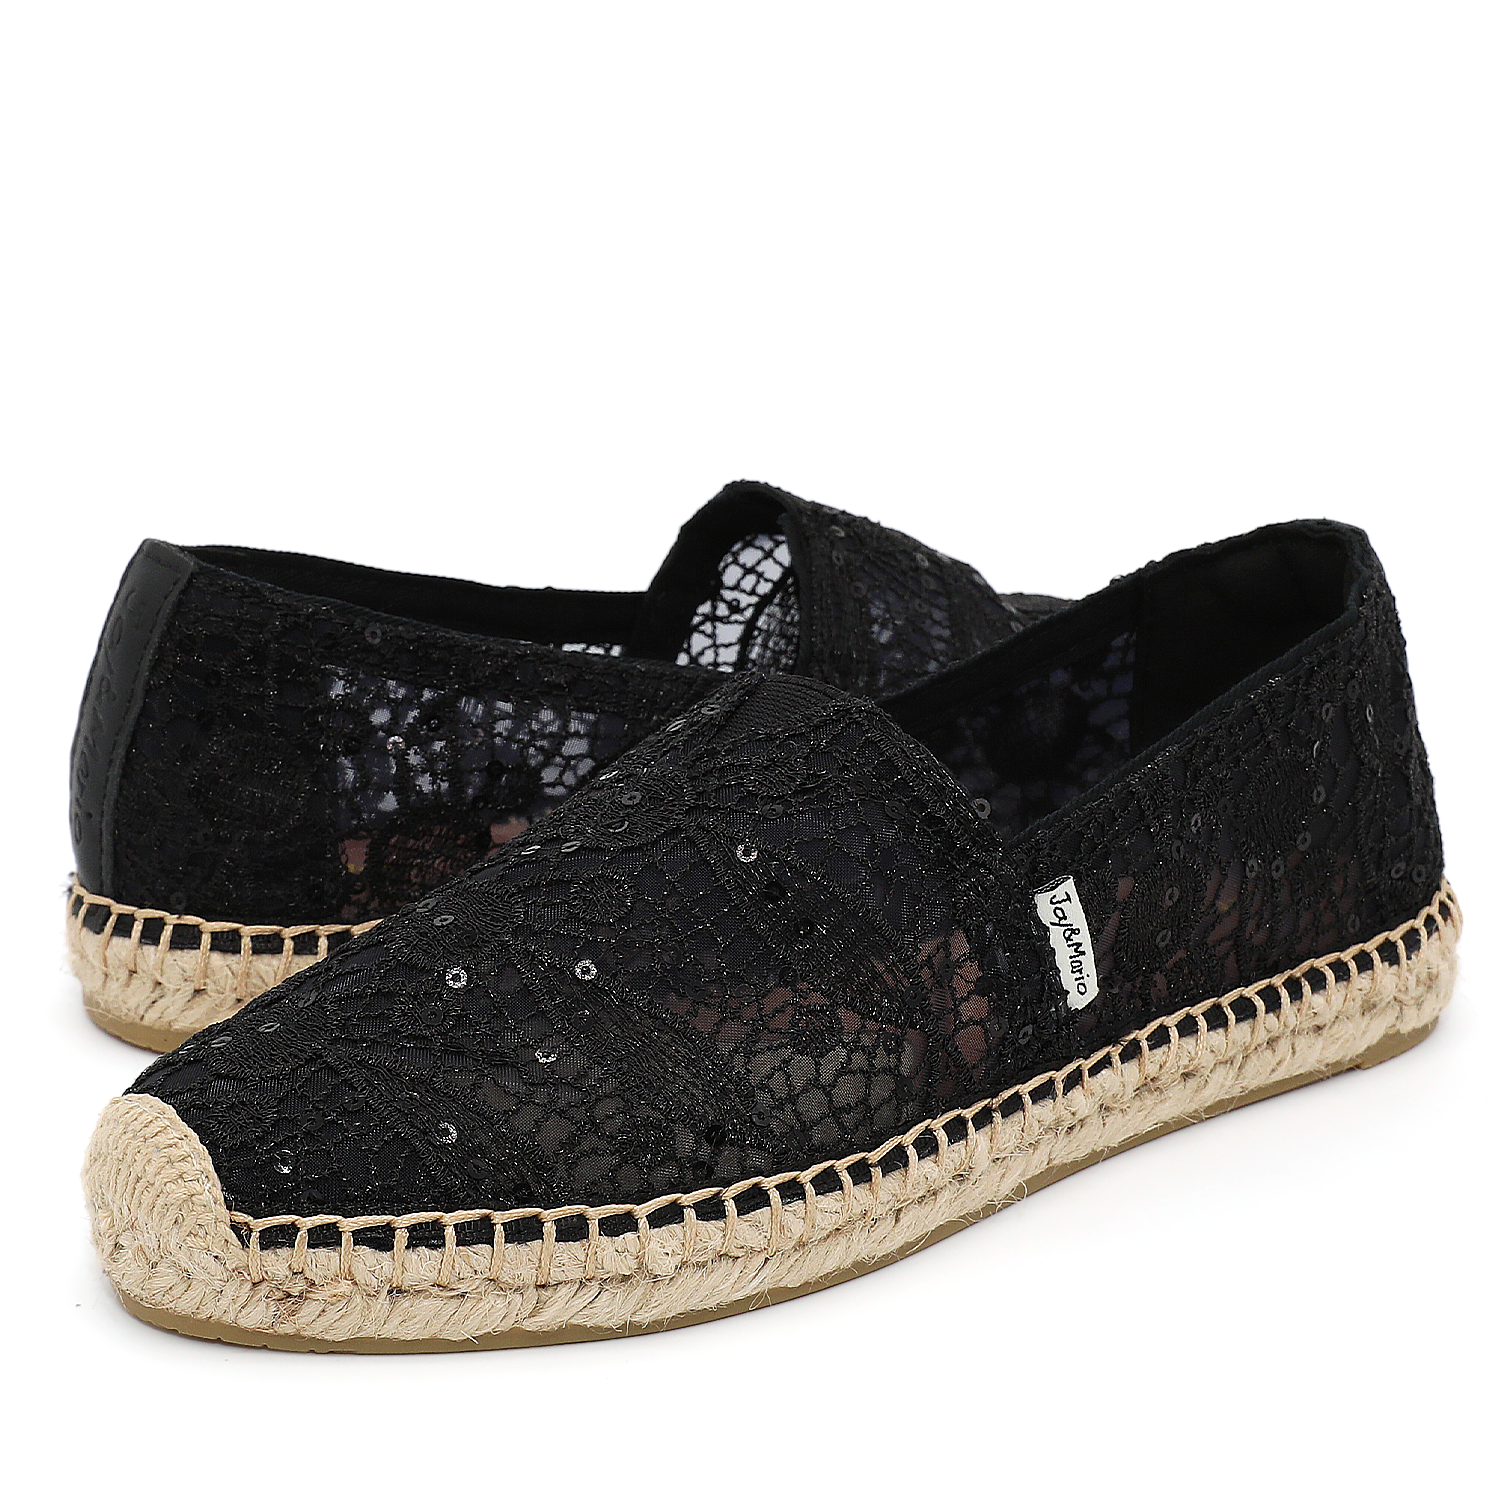 JOY&MARIO Handmade Women’s Slip-On Espadrille Mesh Loafers Flats in Black-A01961W